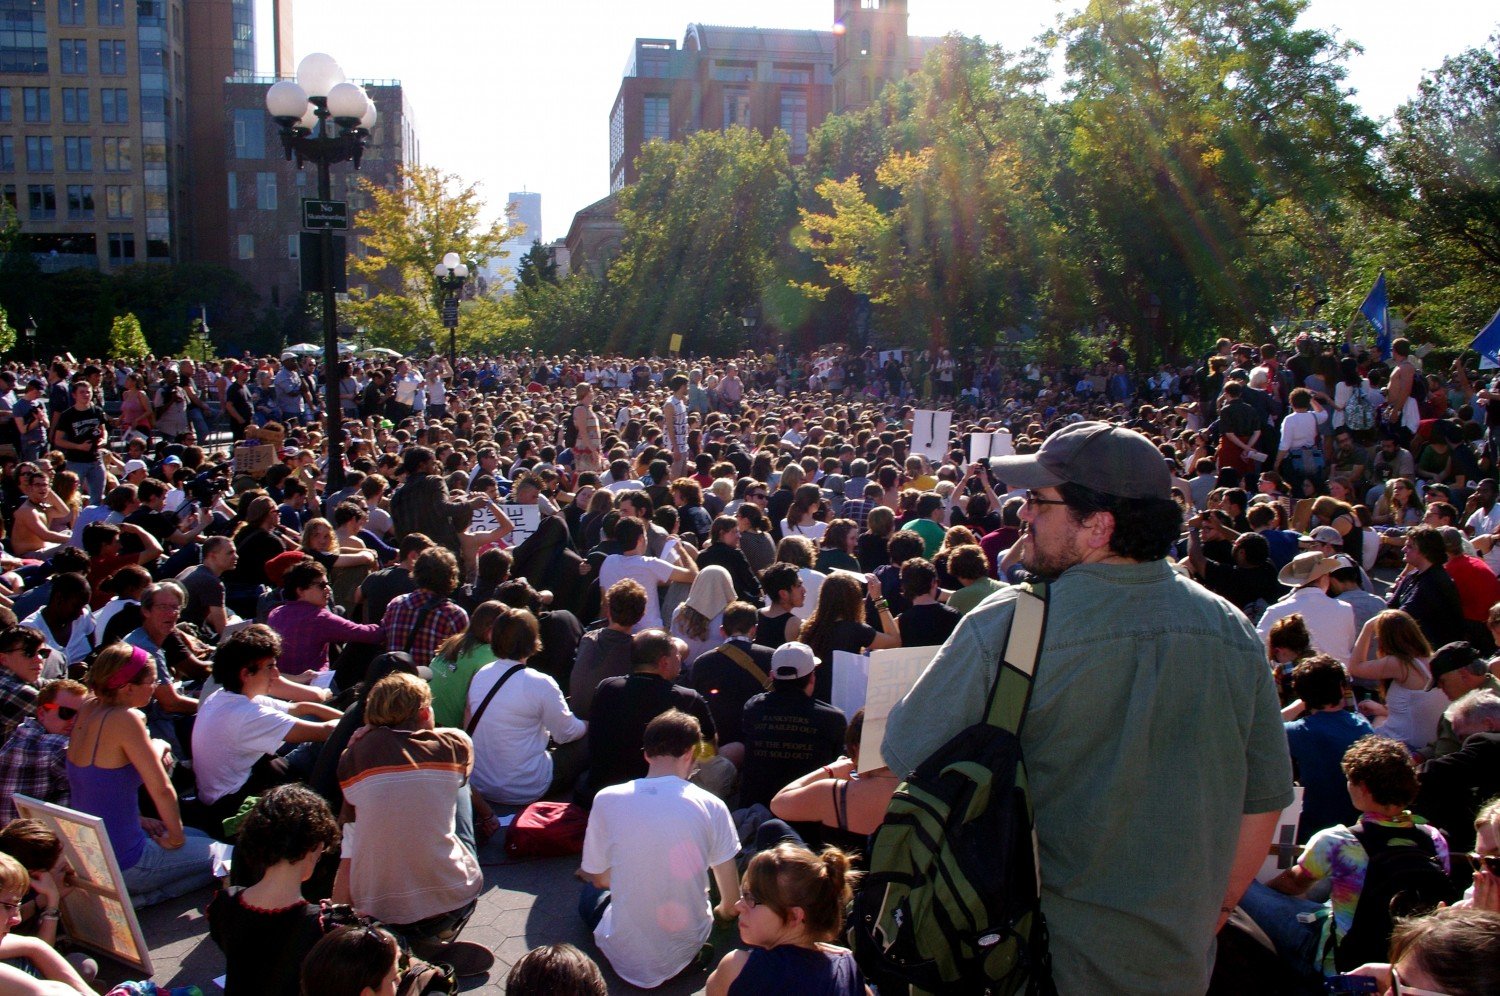   Occupy Wall Street / fot. David Shankbone, CC BY 2.0